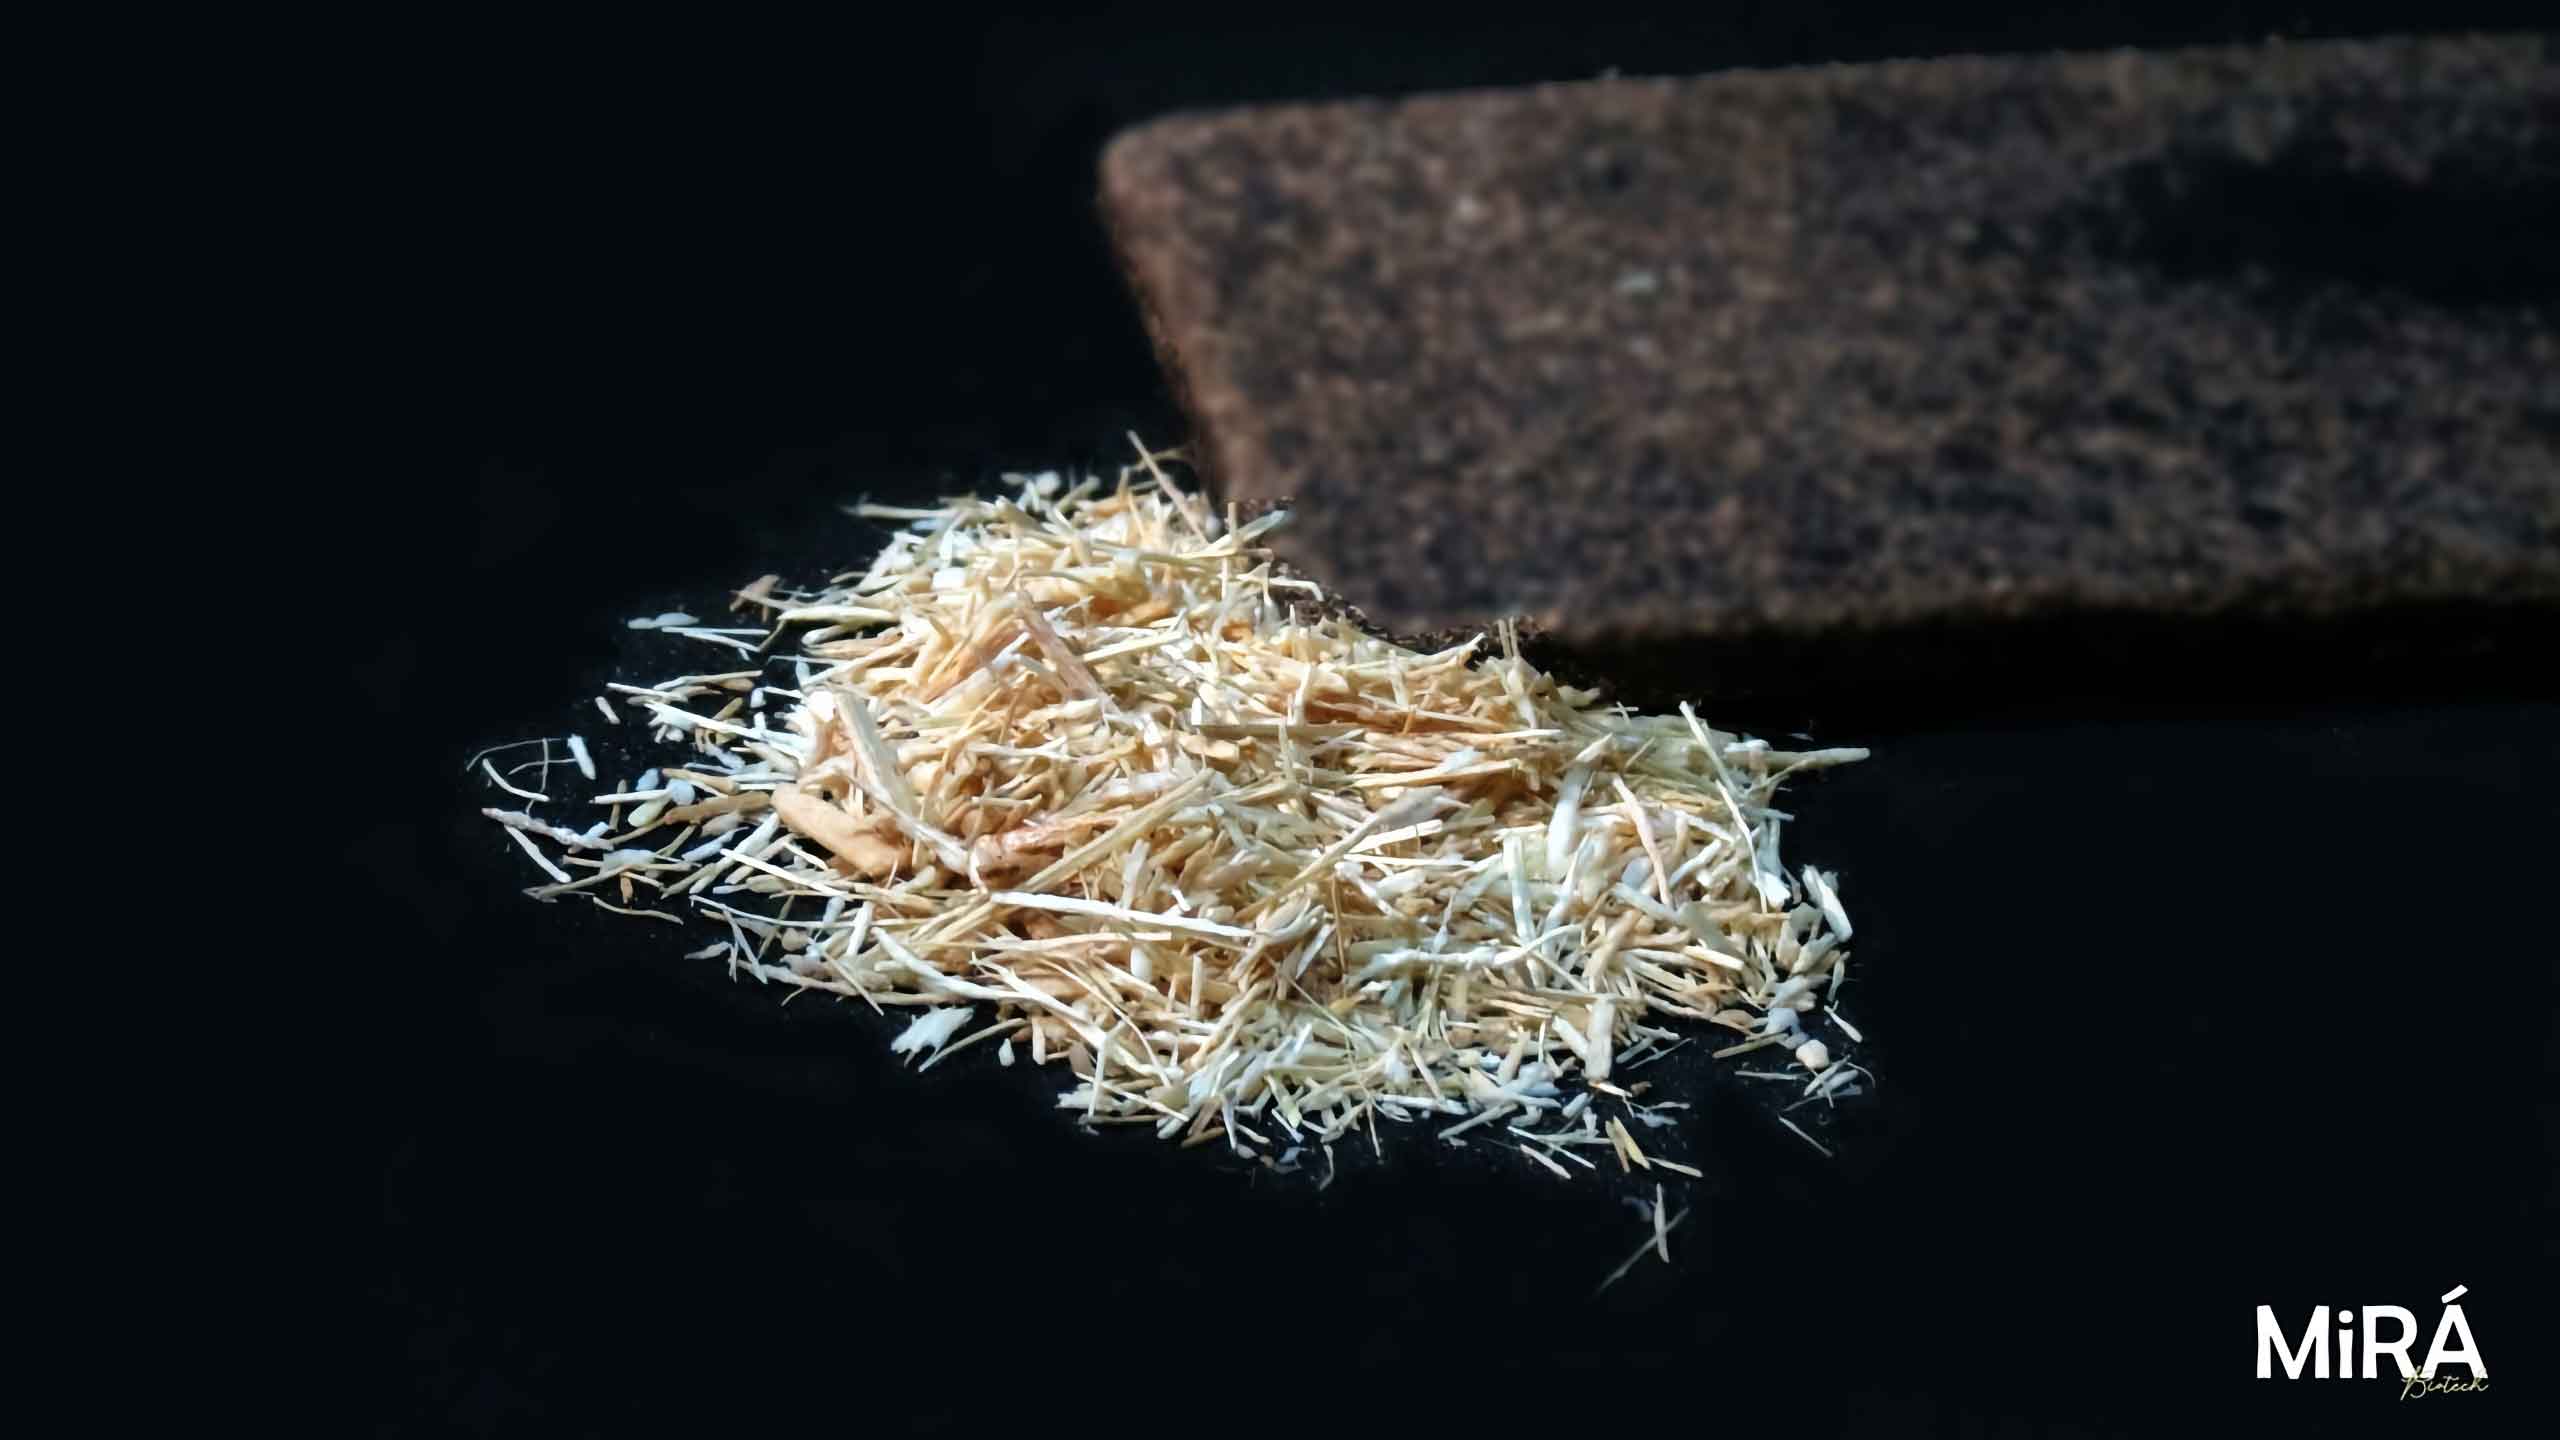 Mirá uses enzymes to bind wood fibers into MDF.